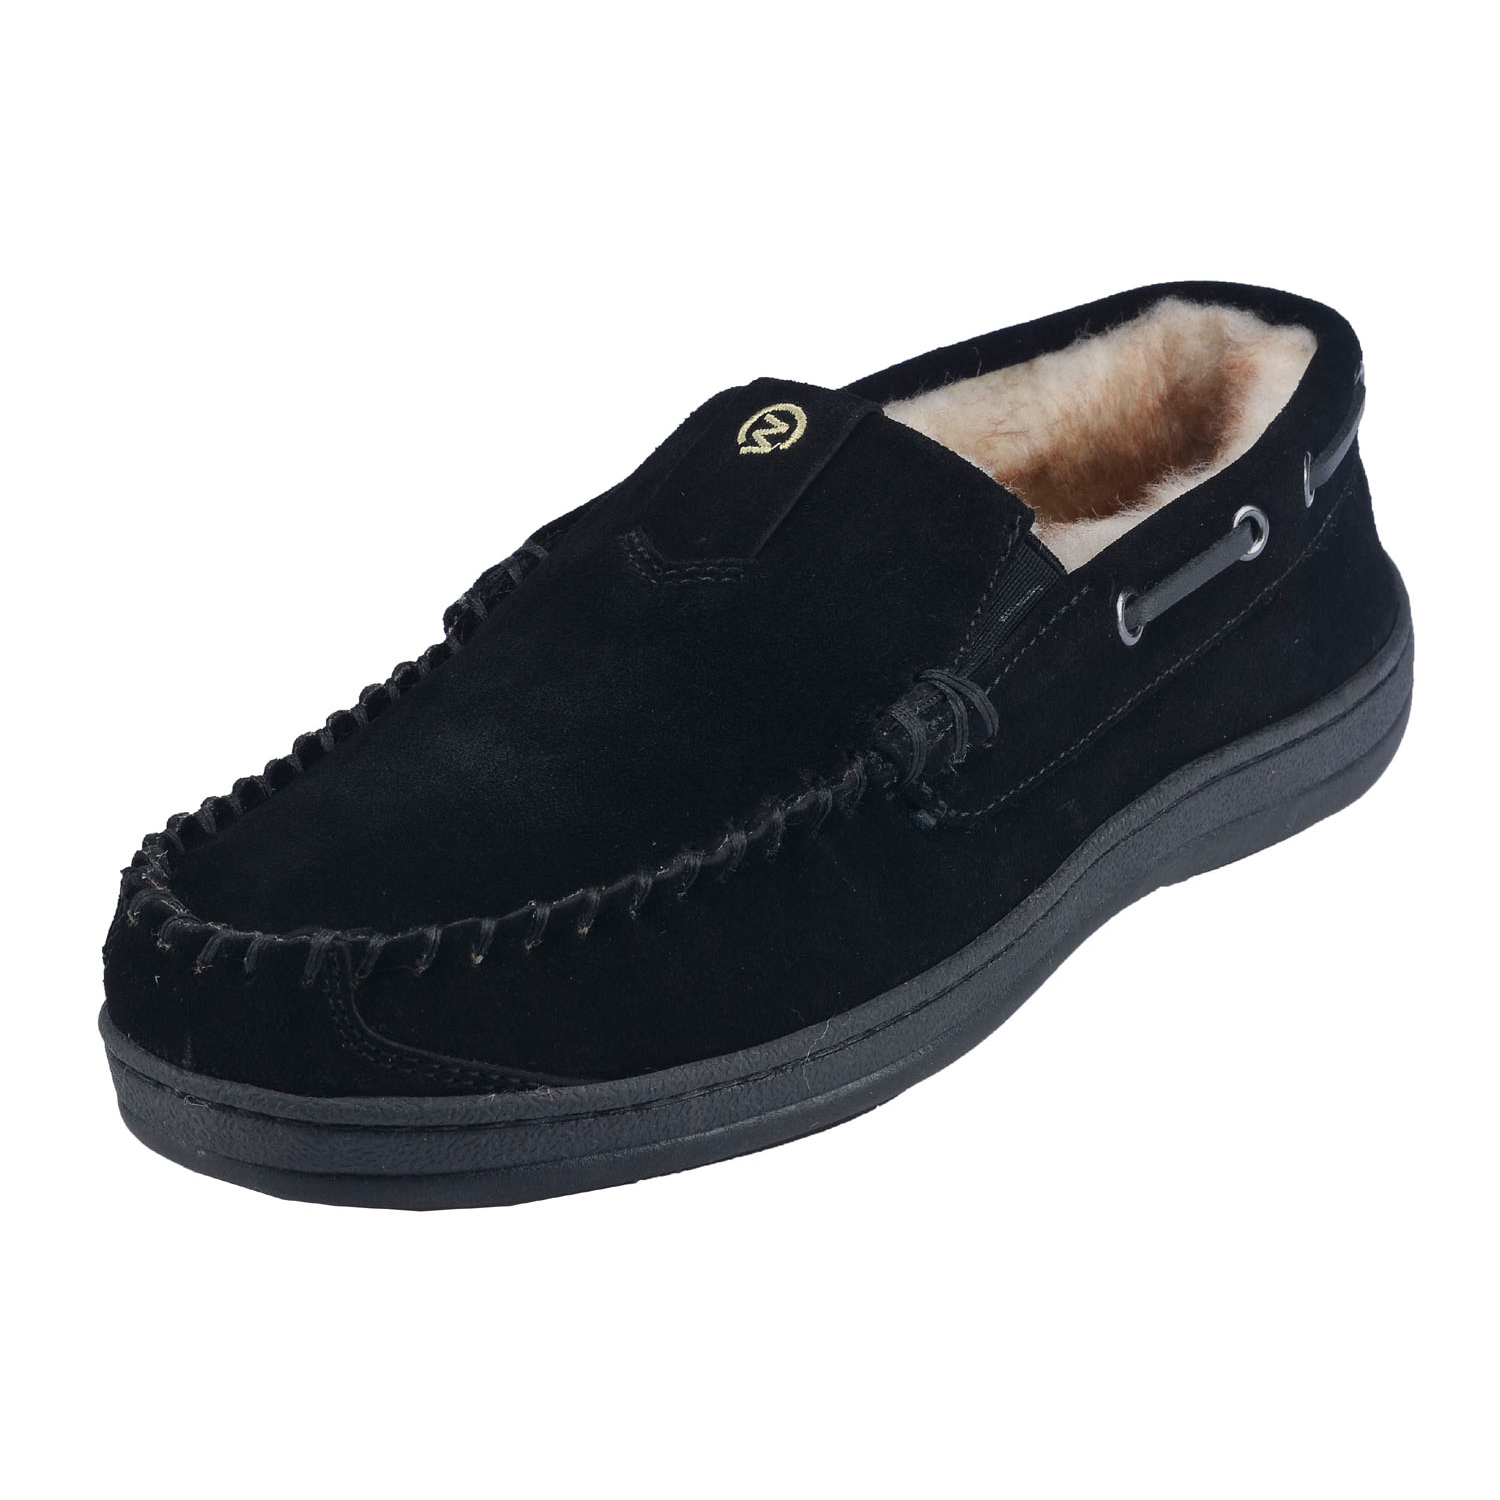 Men's Suede Leather Mocaasin Slipper Slip on Shoes 